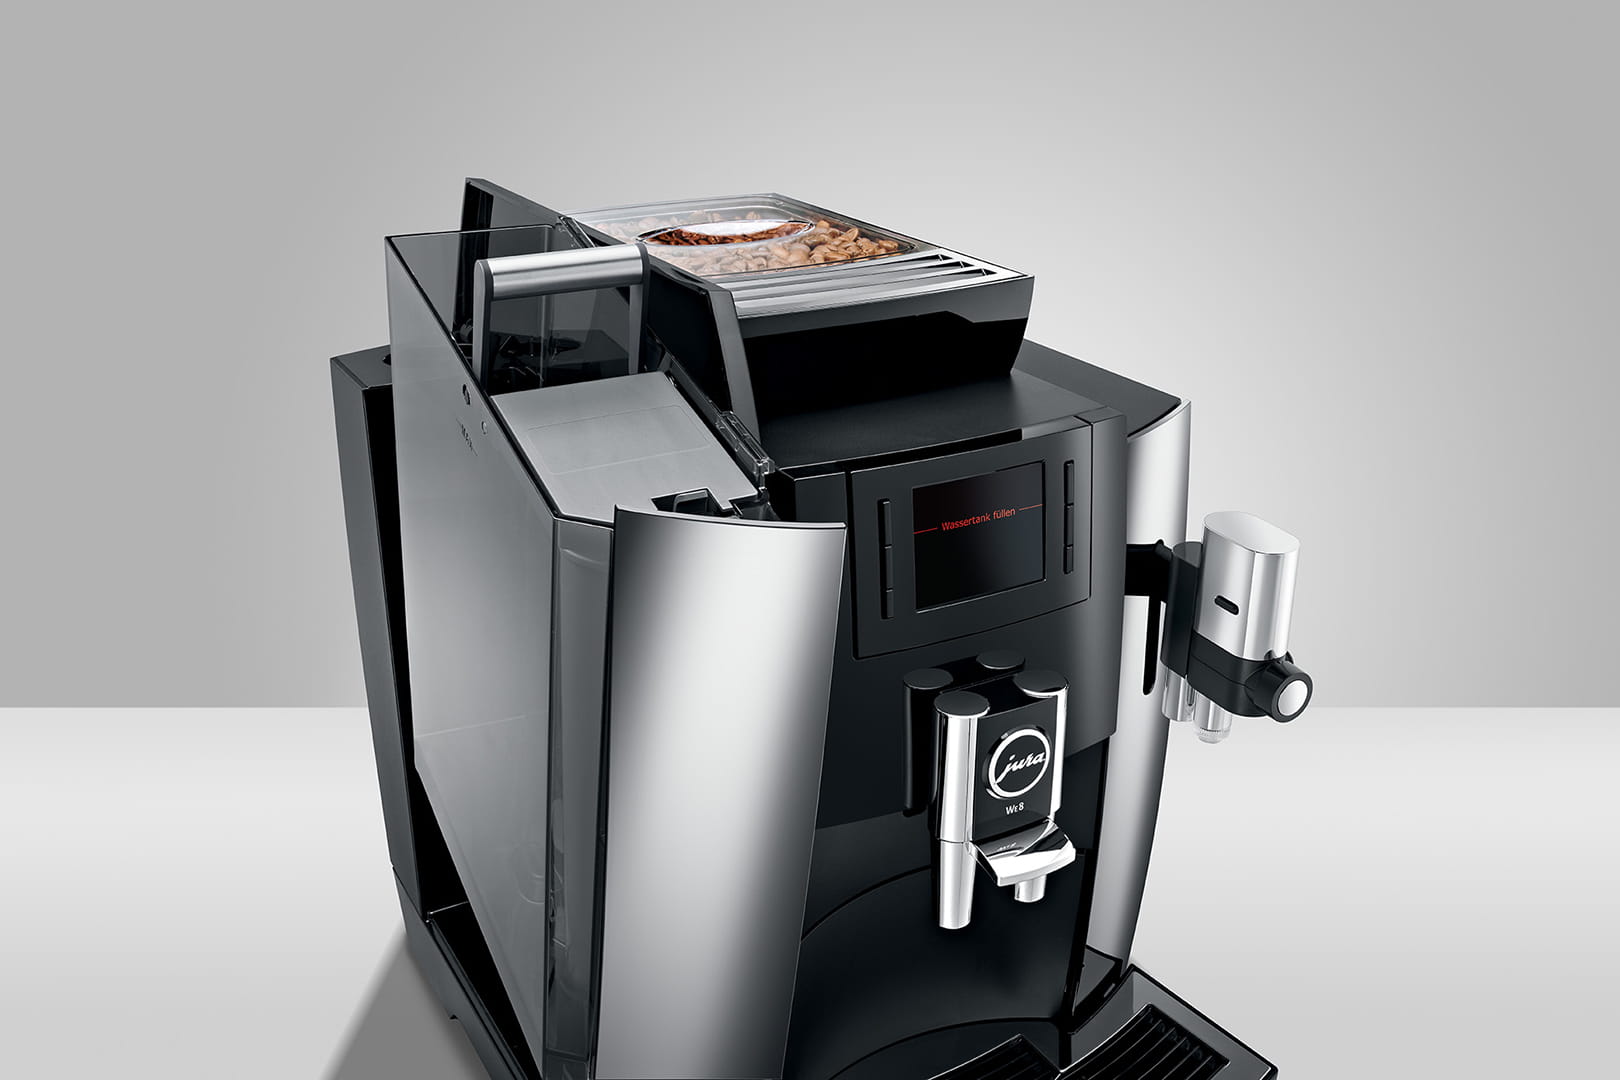 Jura 15145 Automatic Coffee Machine WE8, Chrome 72229 Cup Warmer, Black